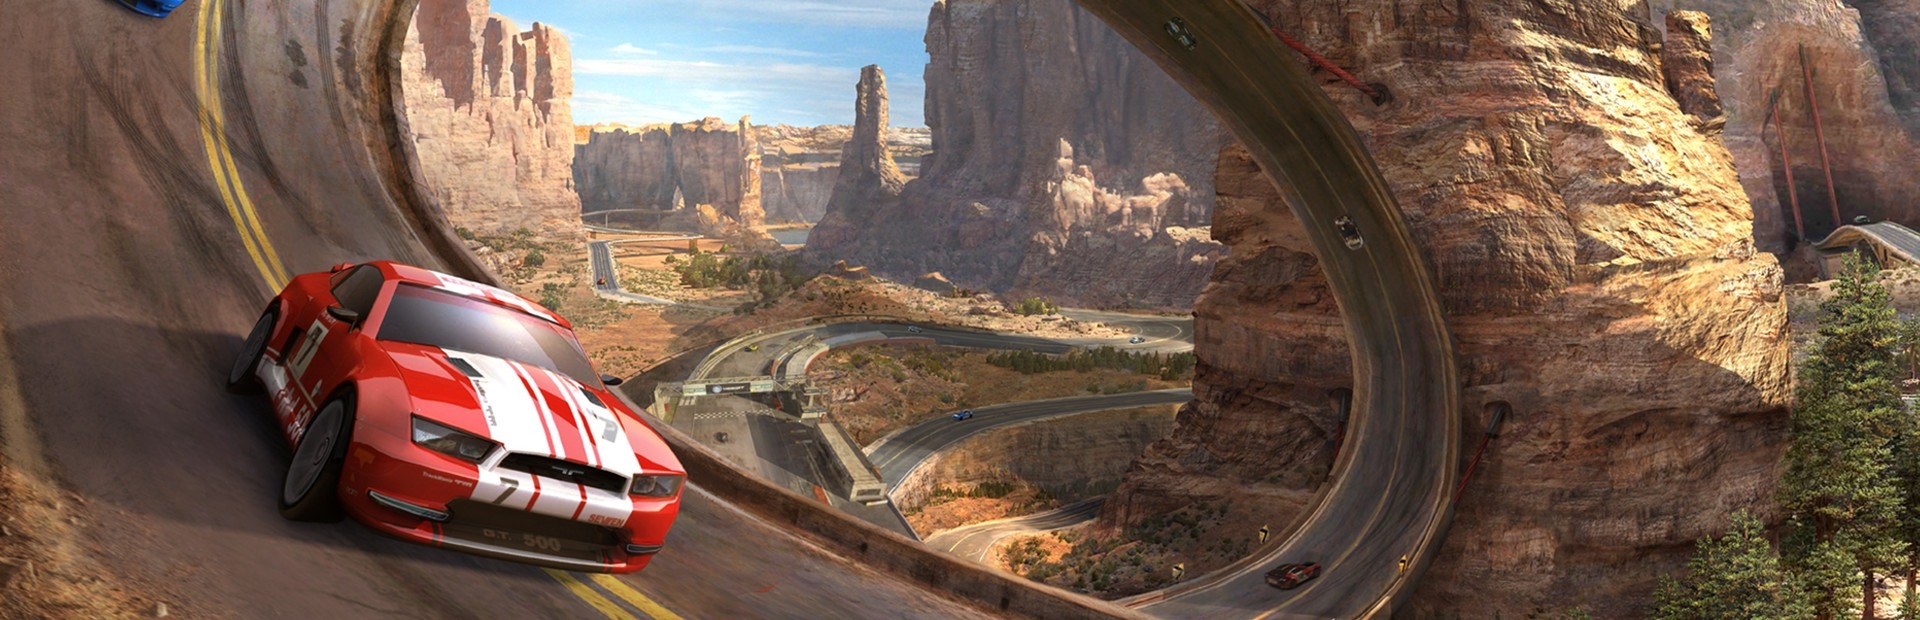 TrackMania? Canyon